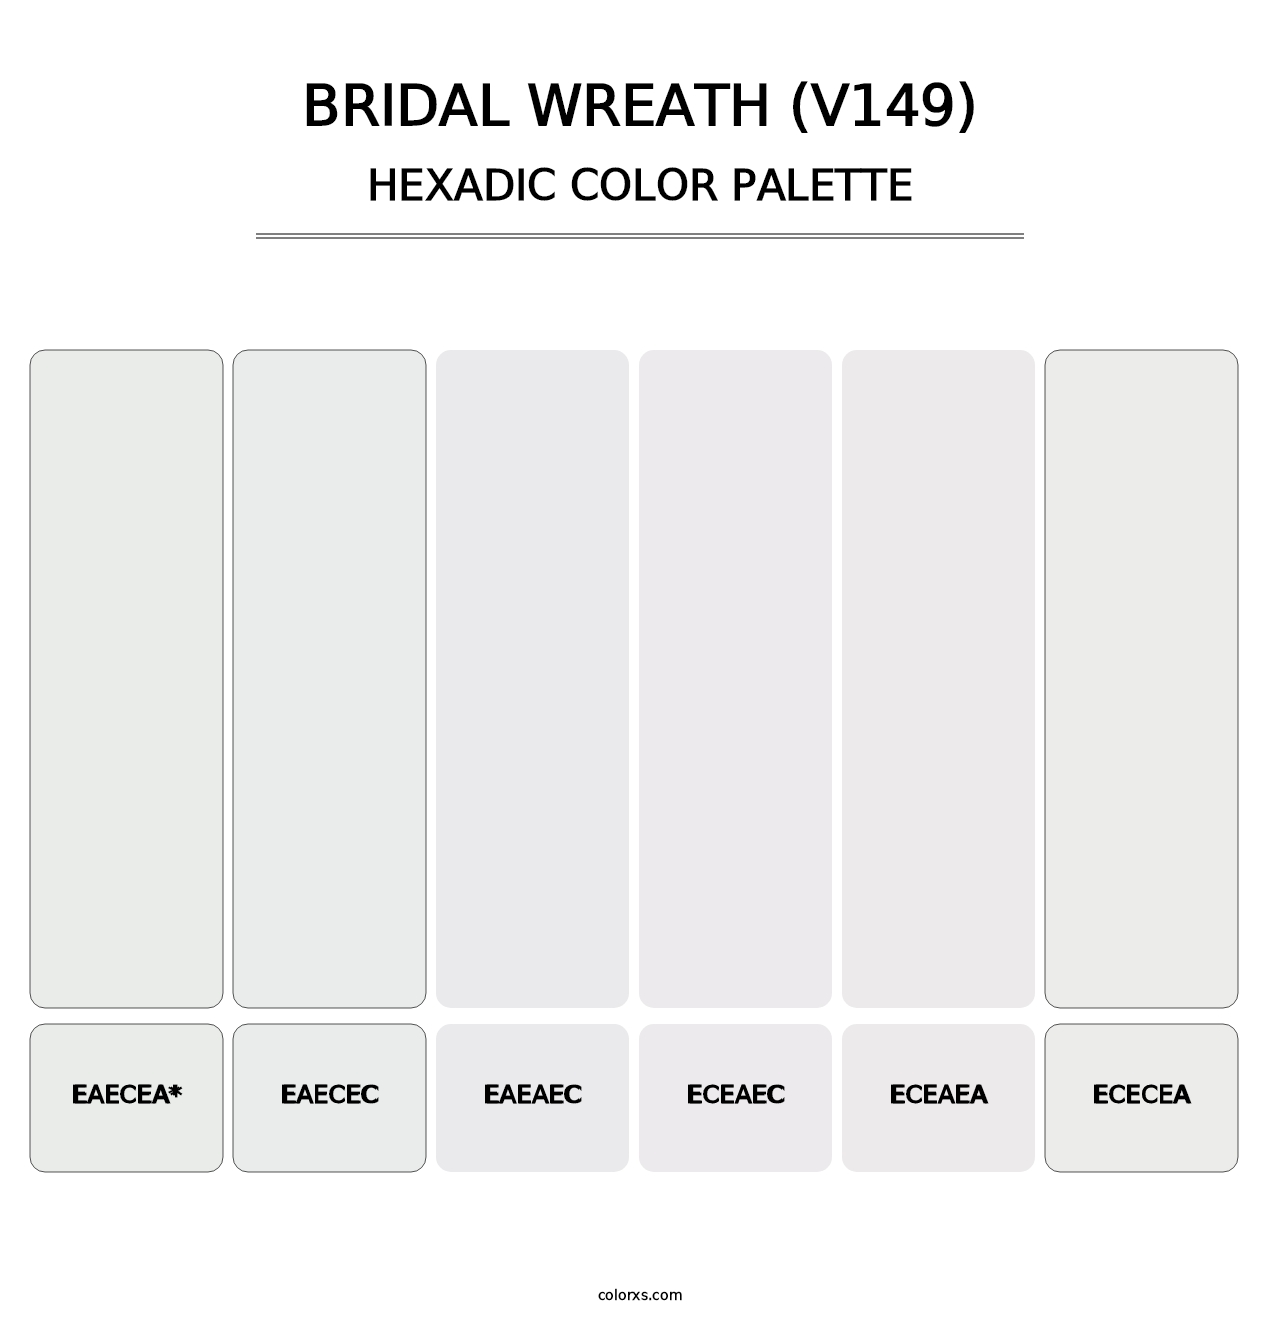 Bridal Wreath (V149) - Hexadic Color Palette